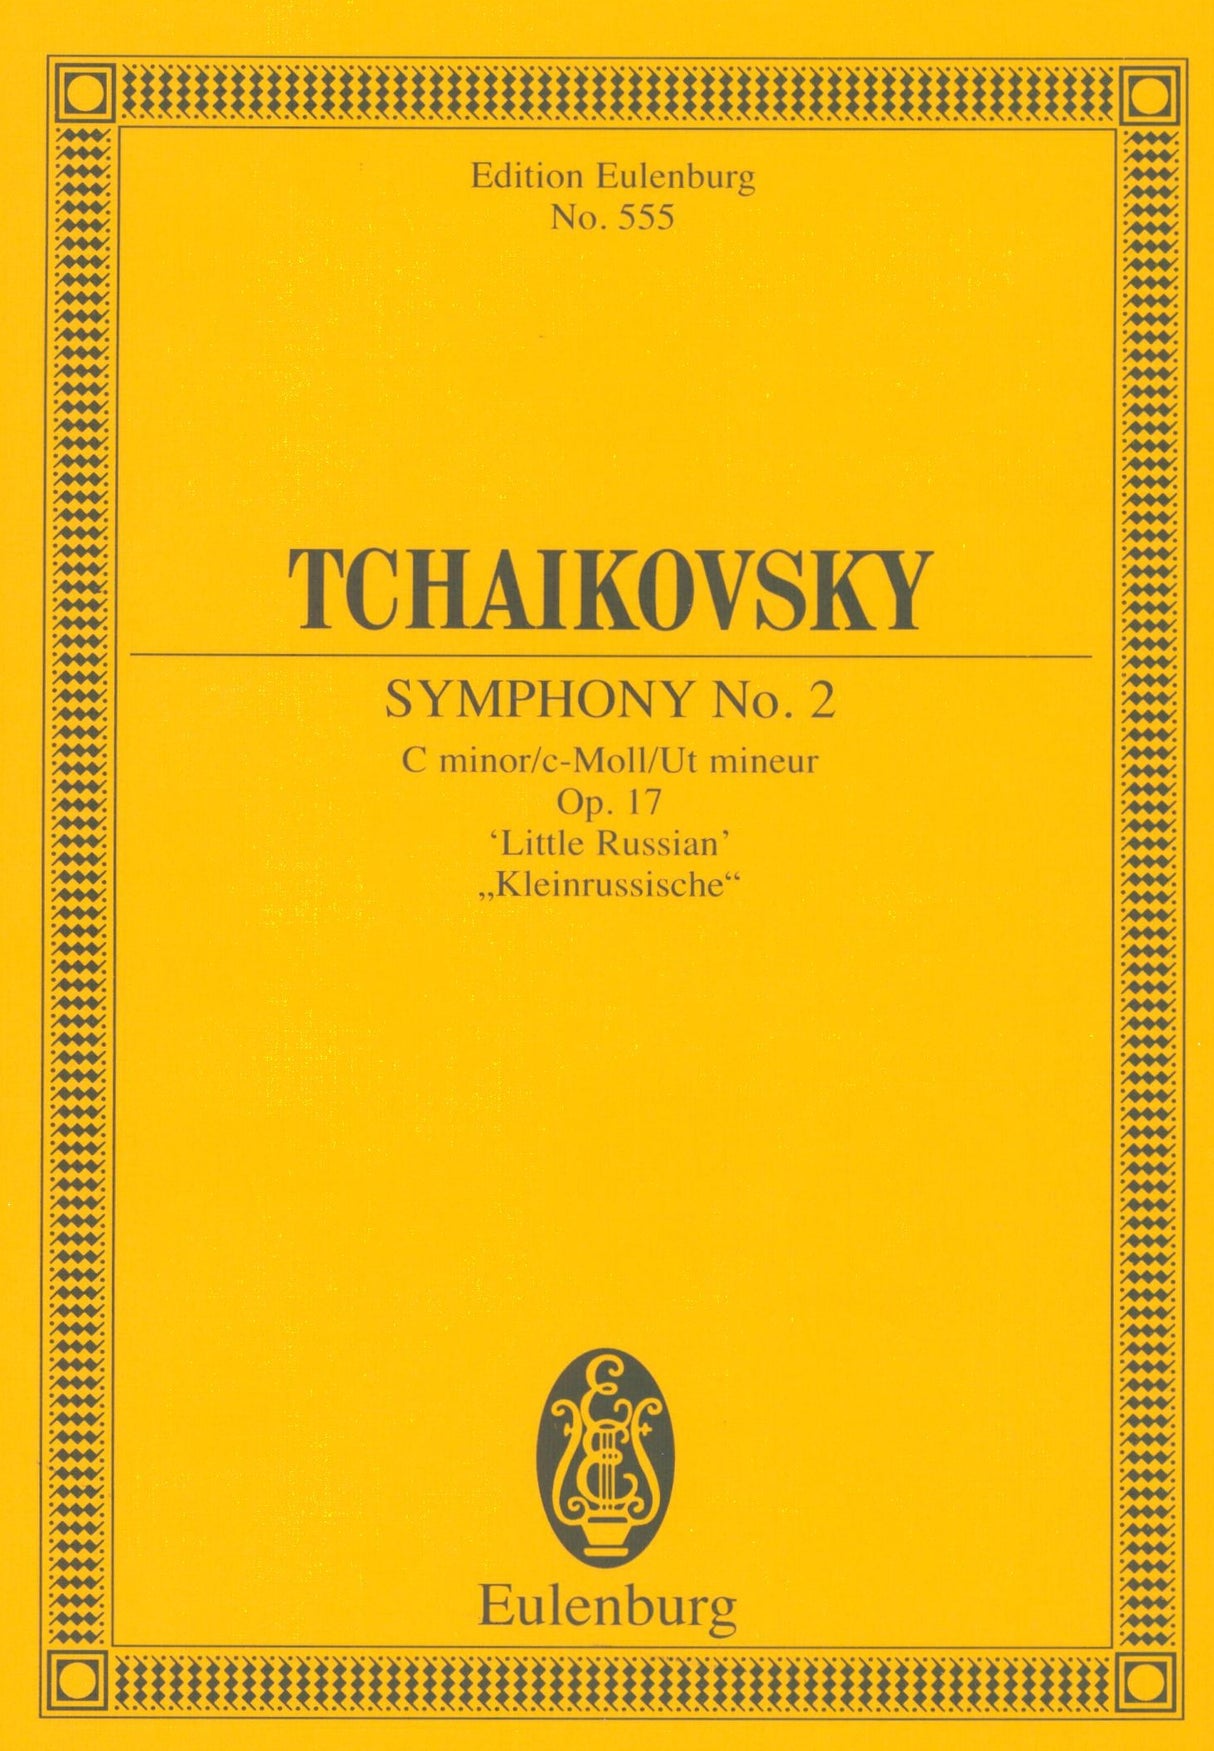 Tchaikovsky: Symphony No. 2 in C Minor, Op. 17